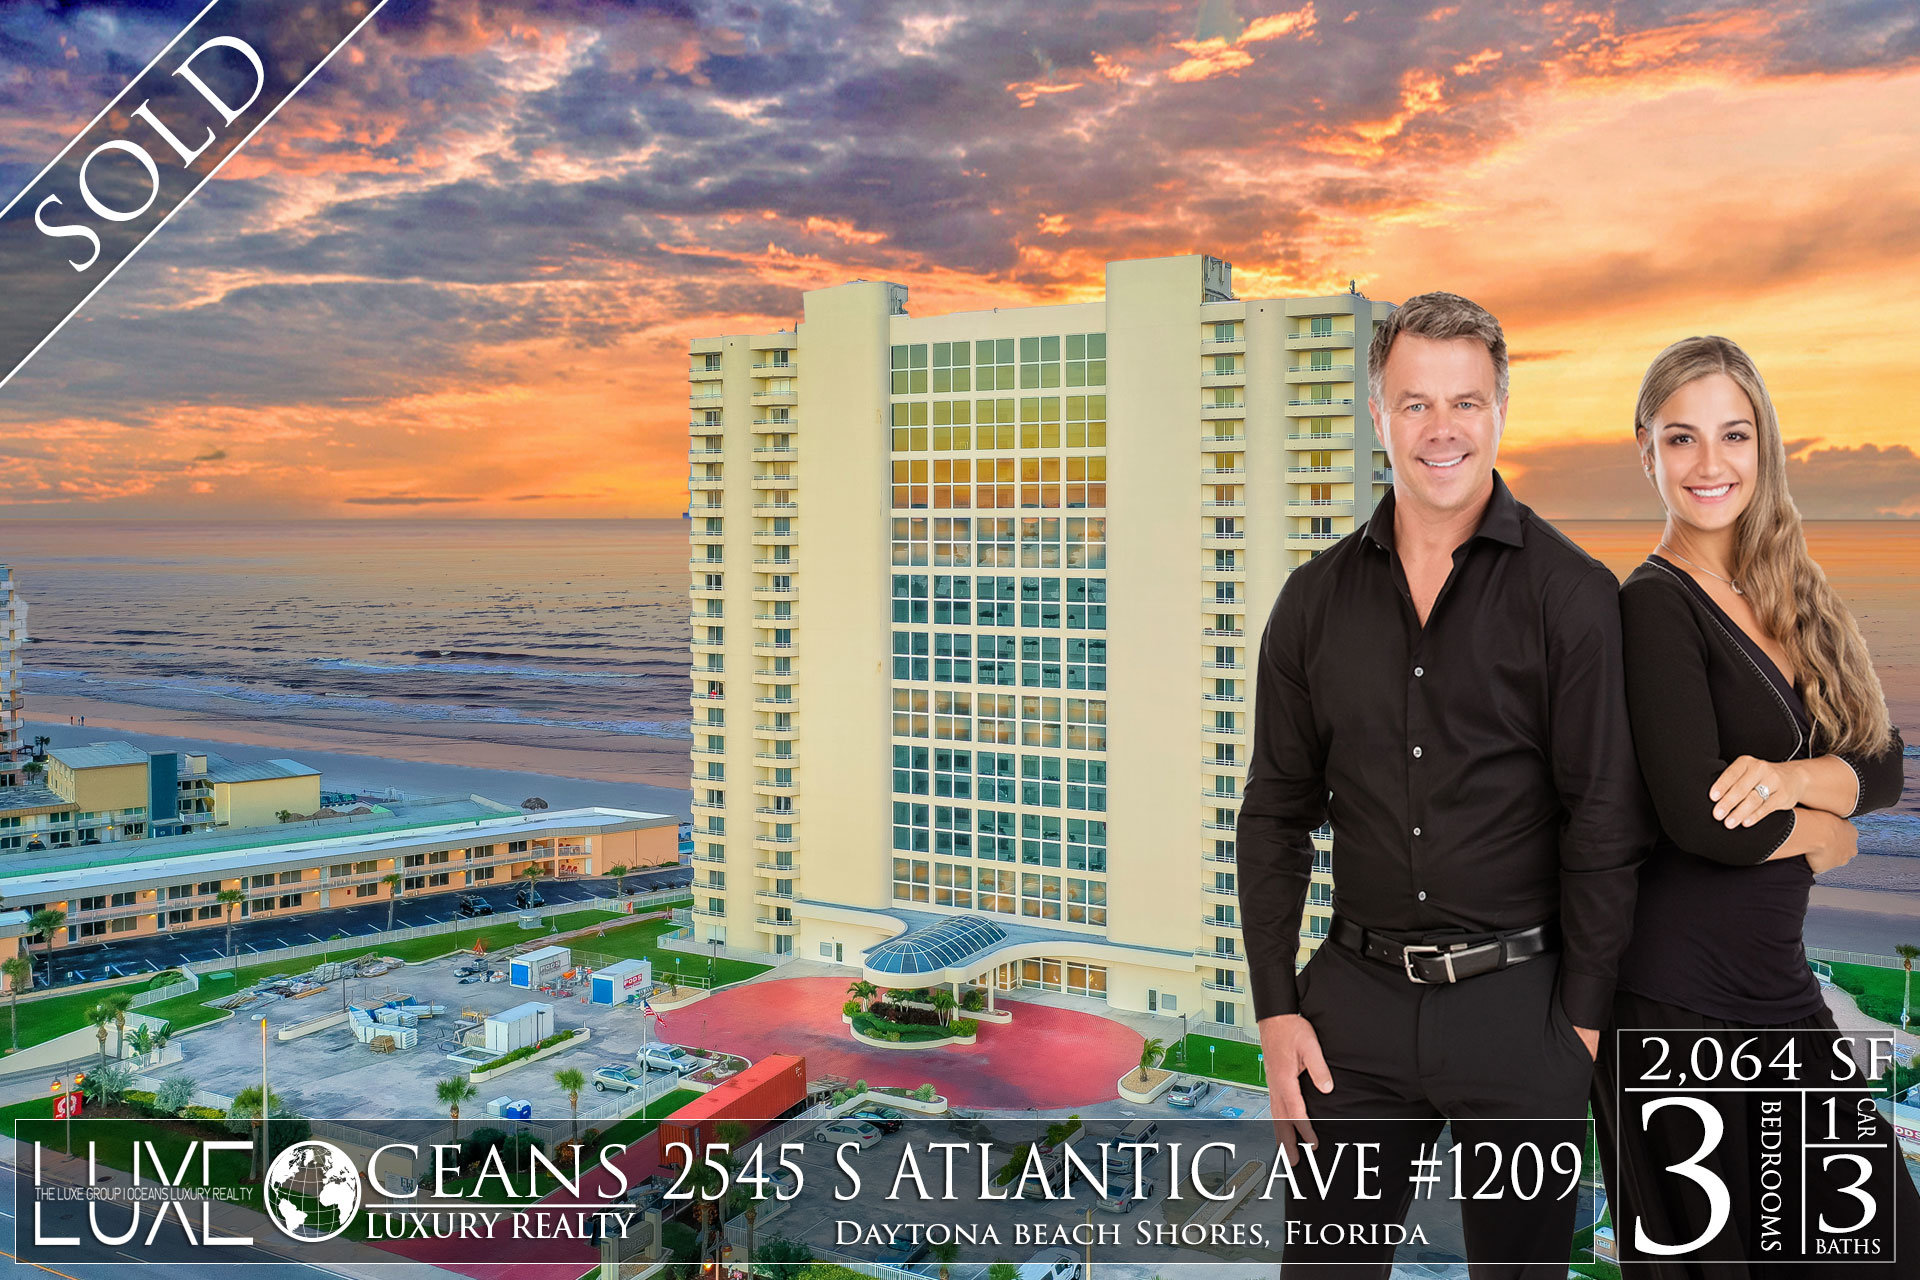 Peninsula Condos For Sale Oceanfront Real Estate at 2545 S Atlantic Ave Daytona Beach Shores, FL 1209  Sold